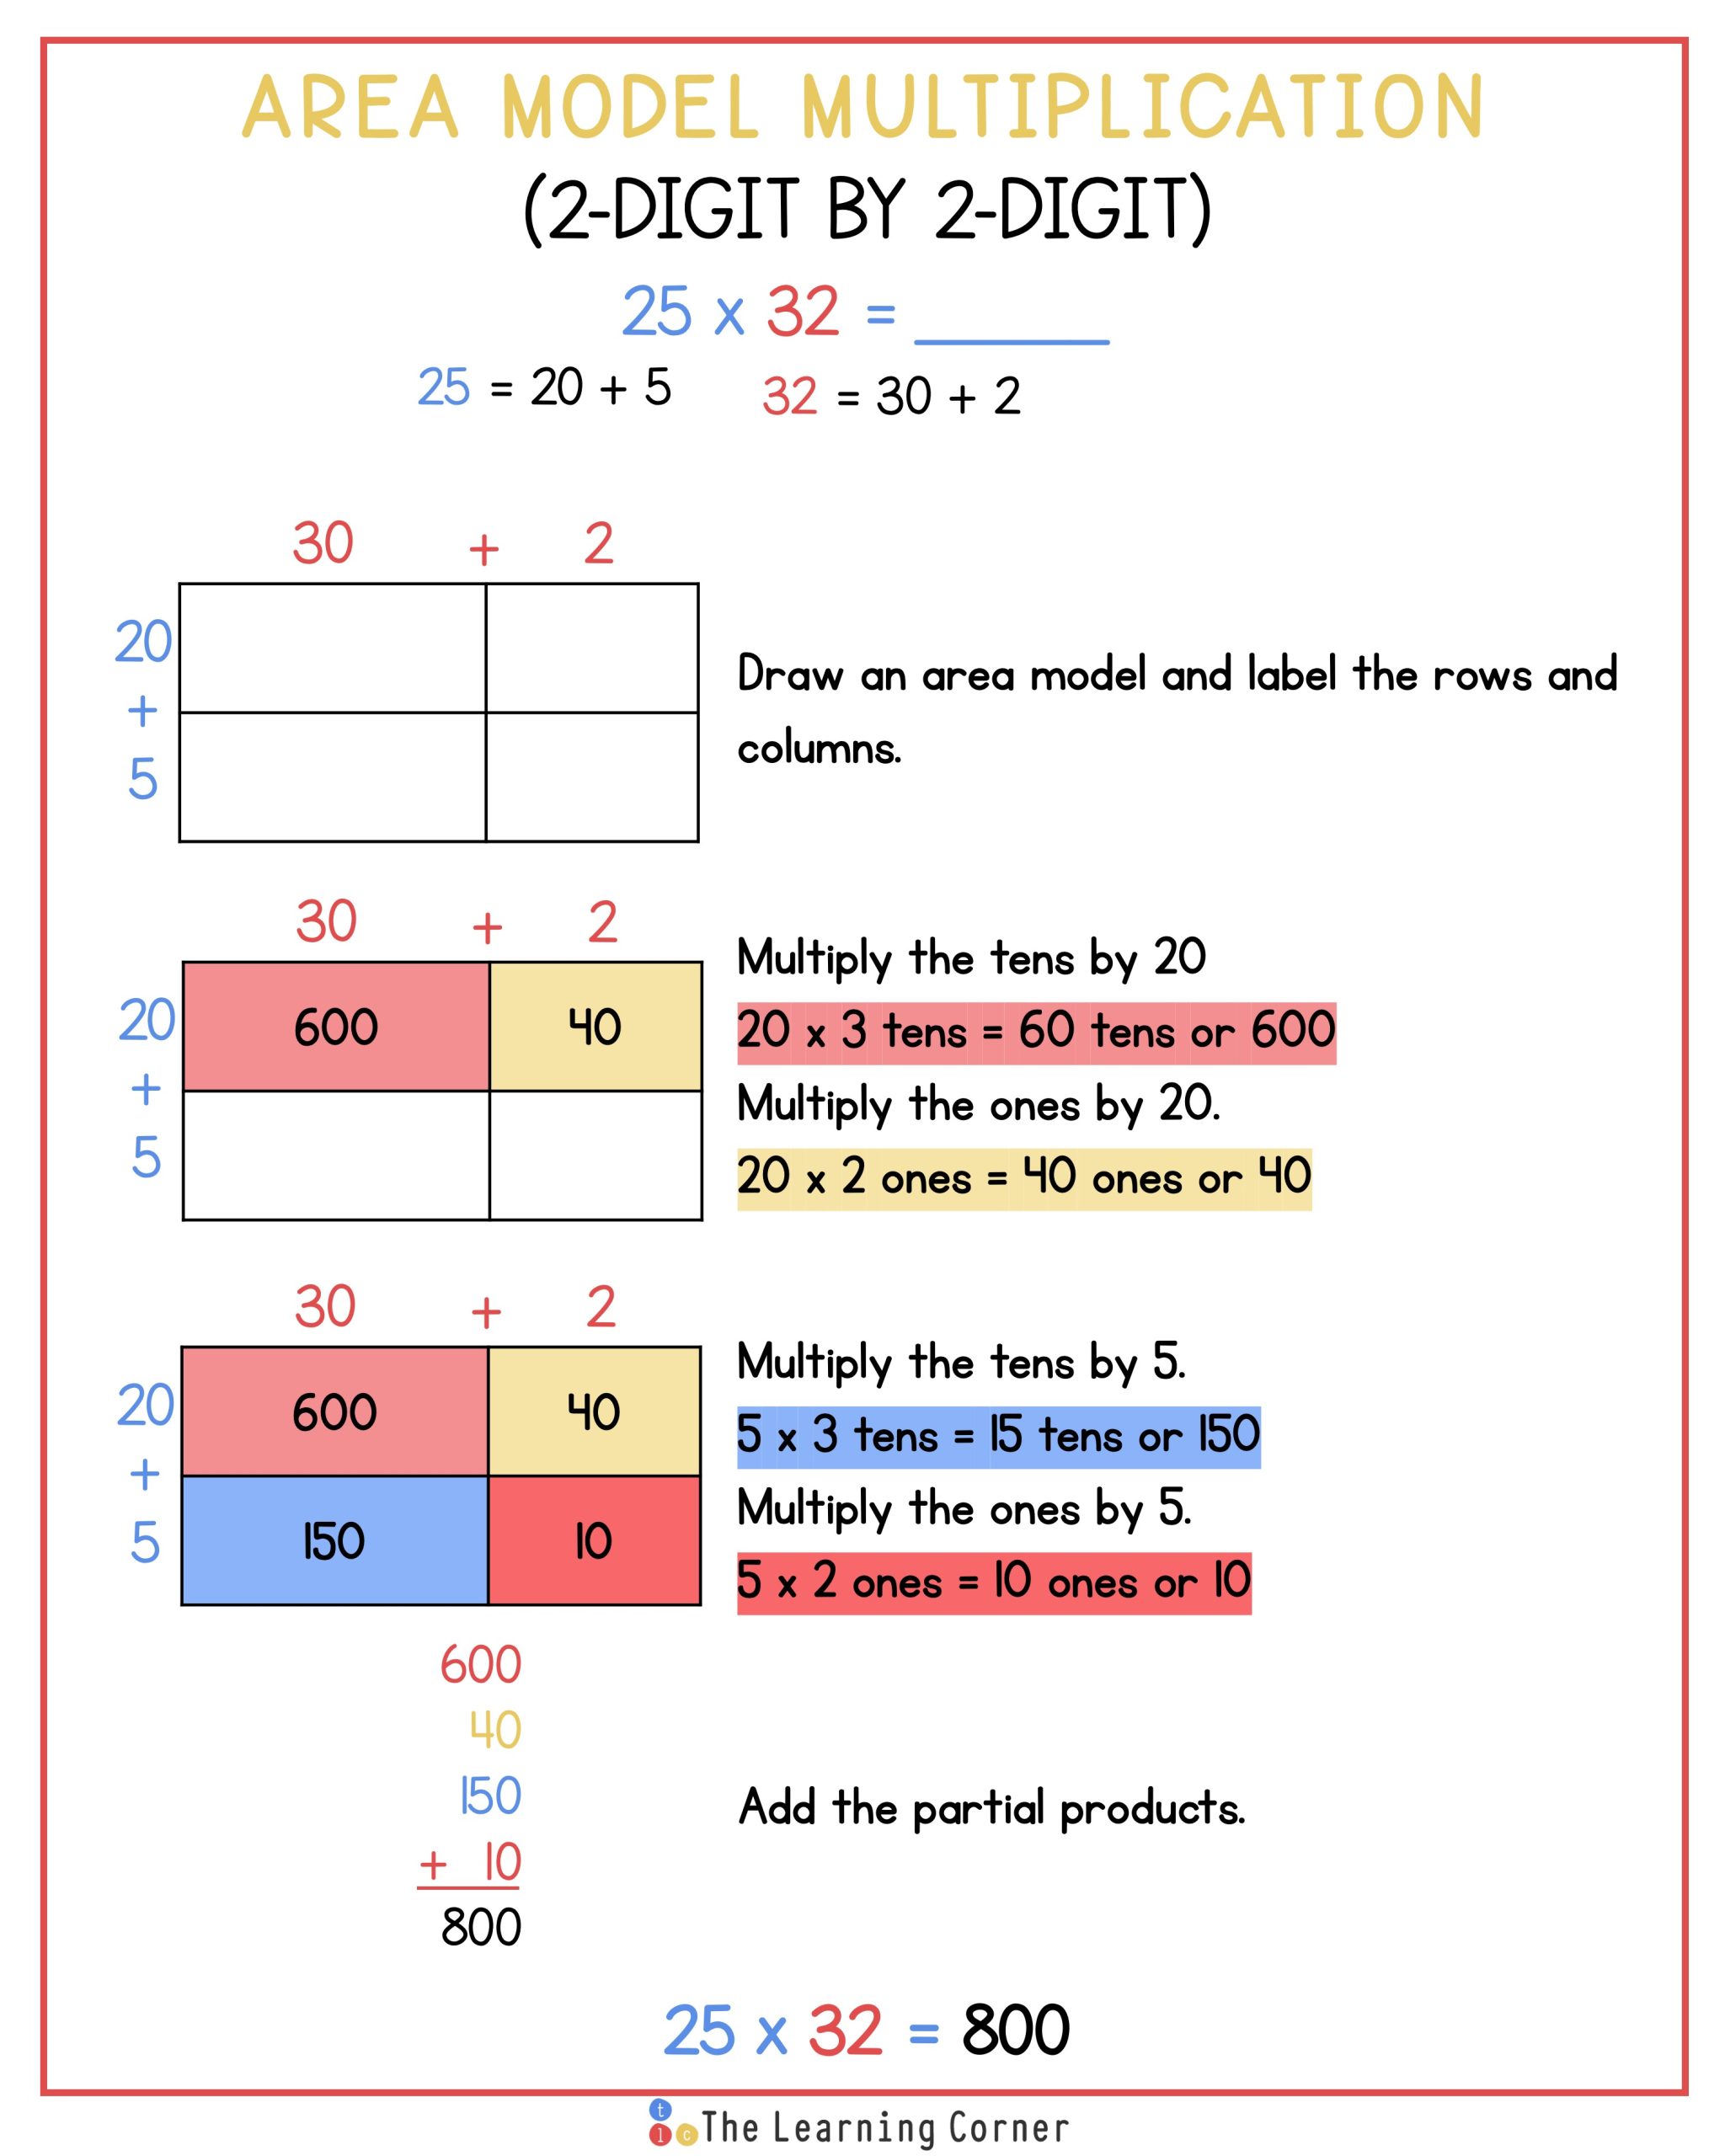 2 digit by 2 digit multiplication using area models